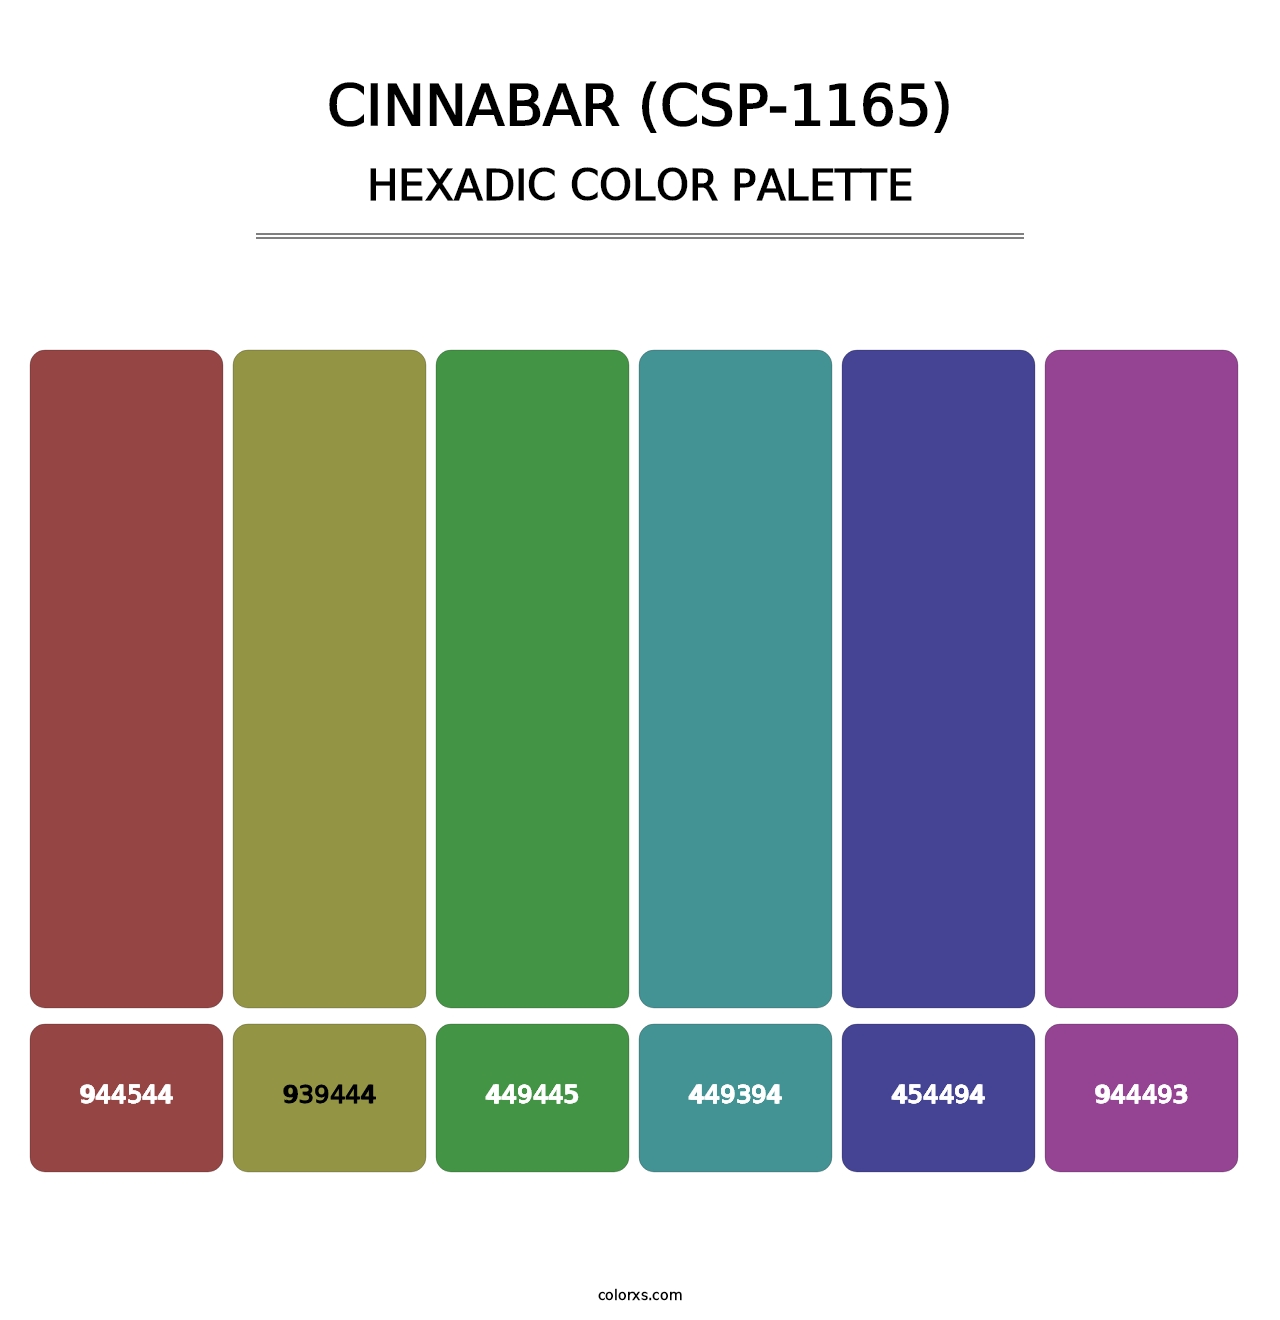 Cinnabar (CSP-1165) - Hexadic Color Palette